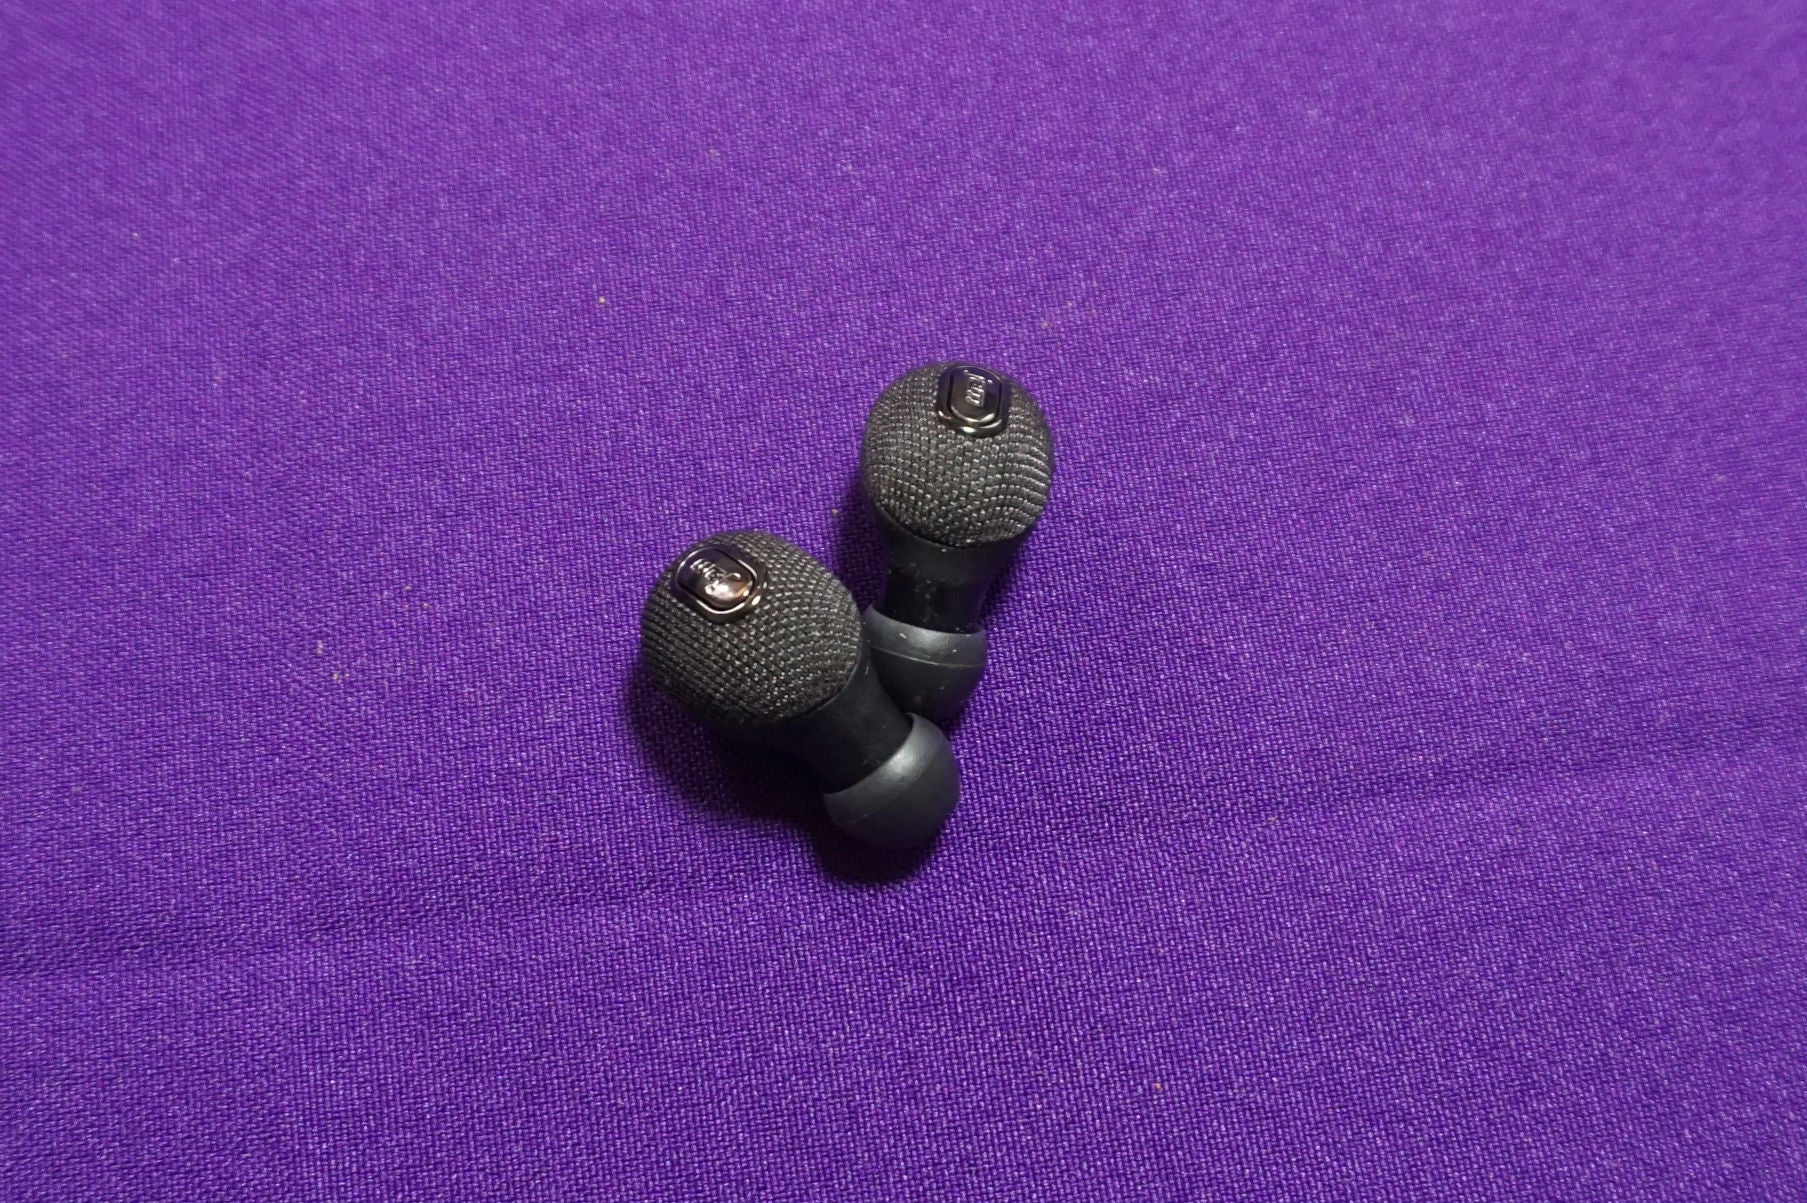 Jam Ultra wireless earbuds on purple fabric background